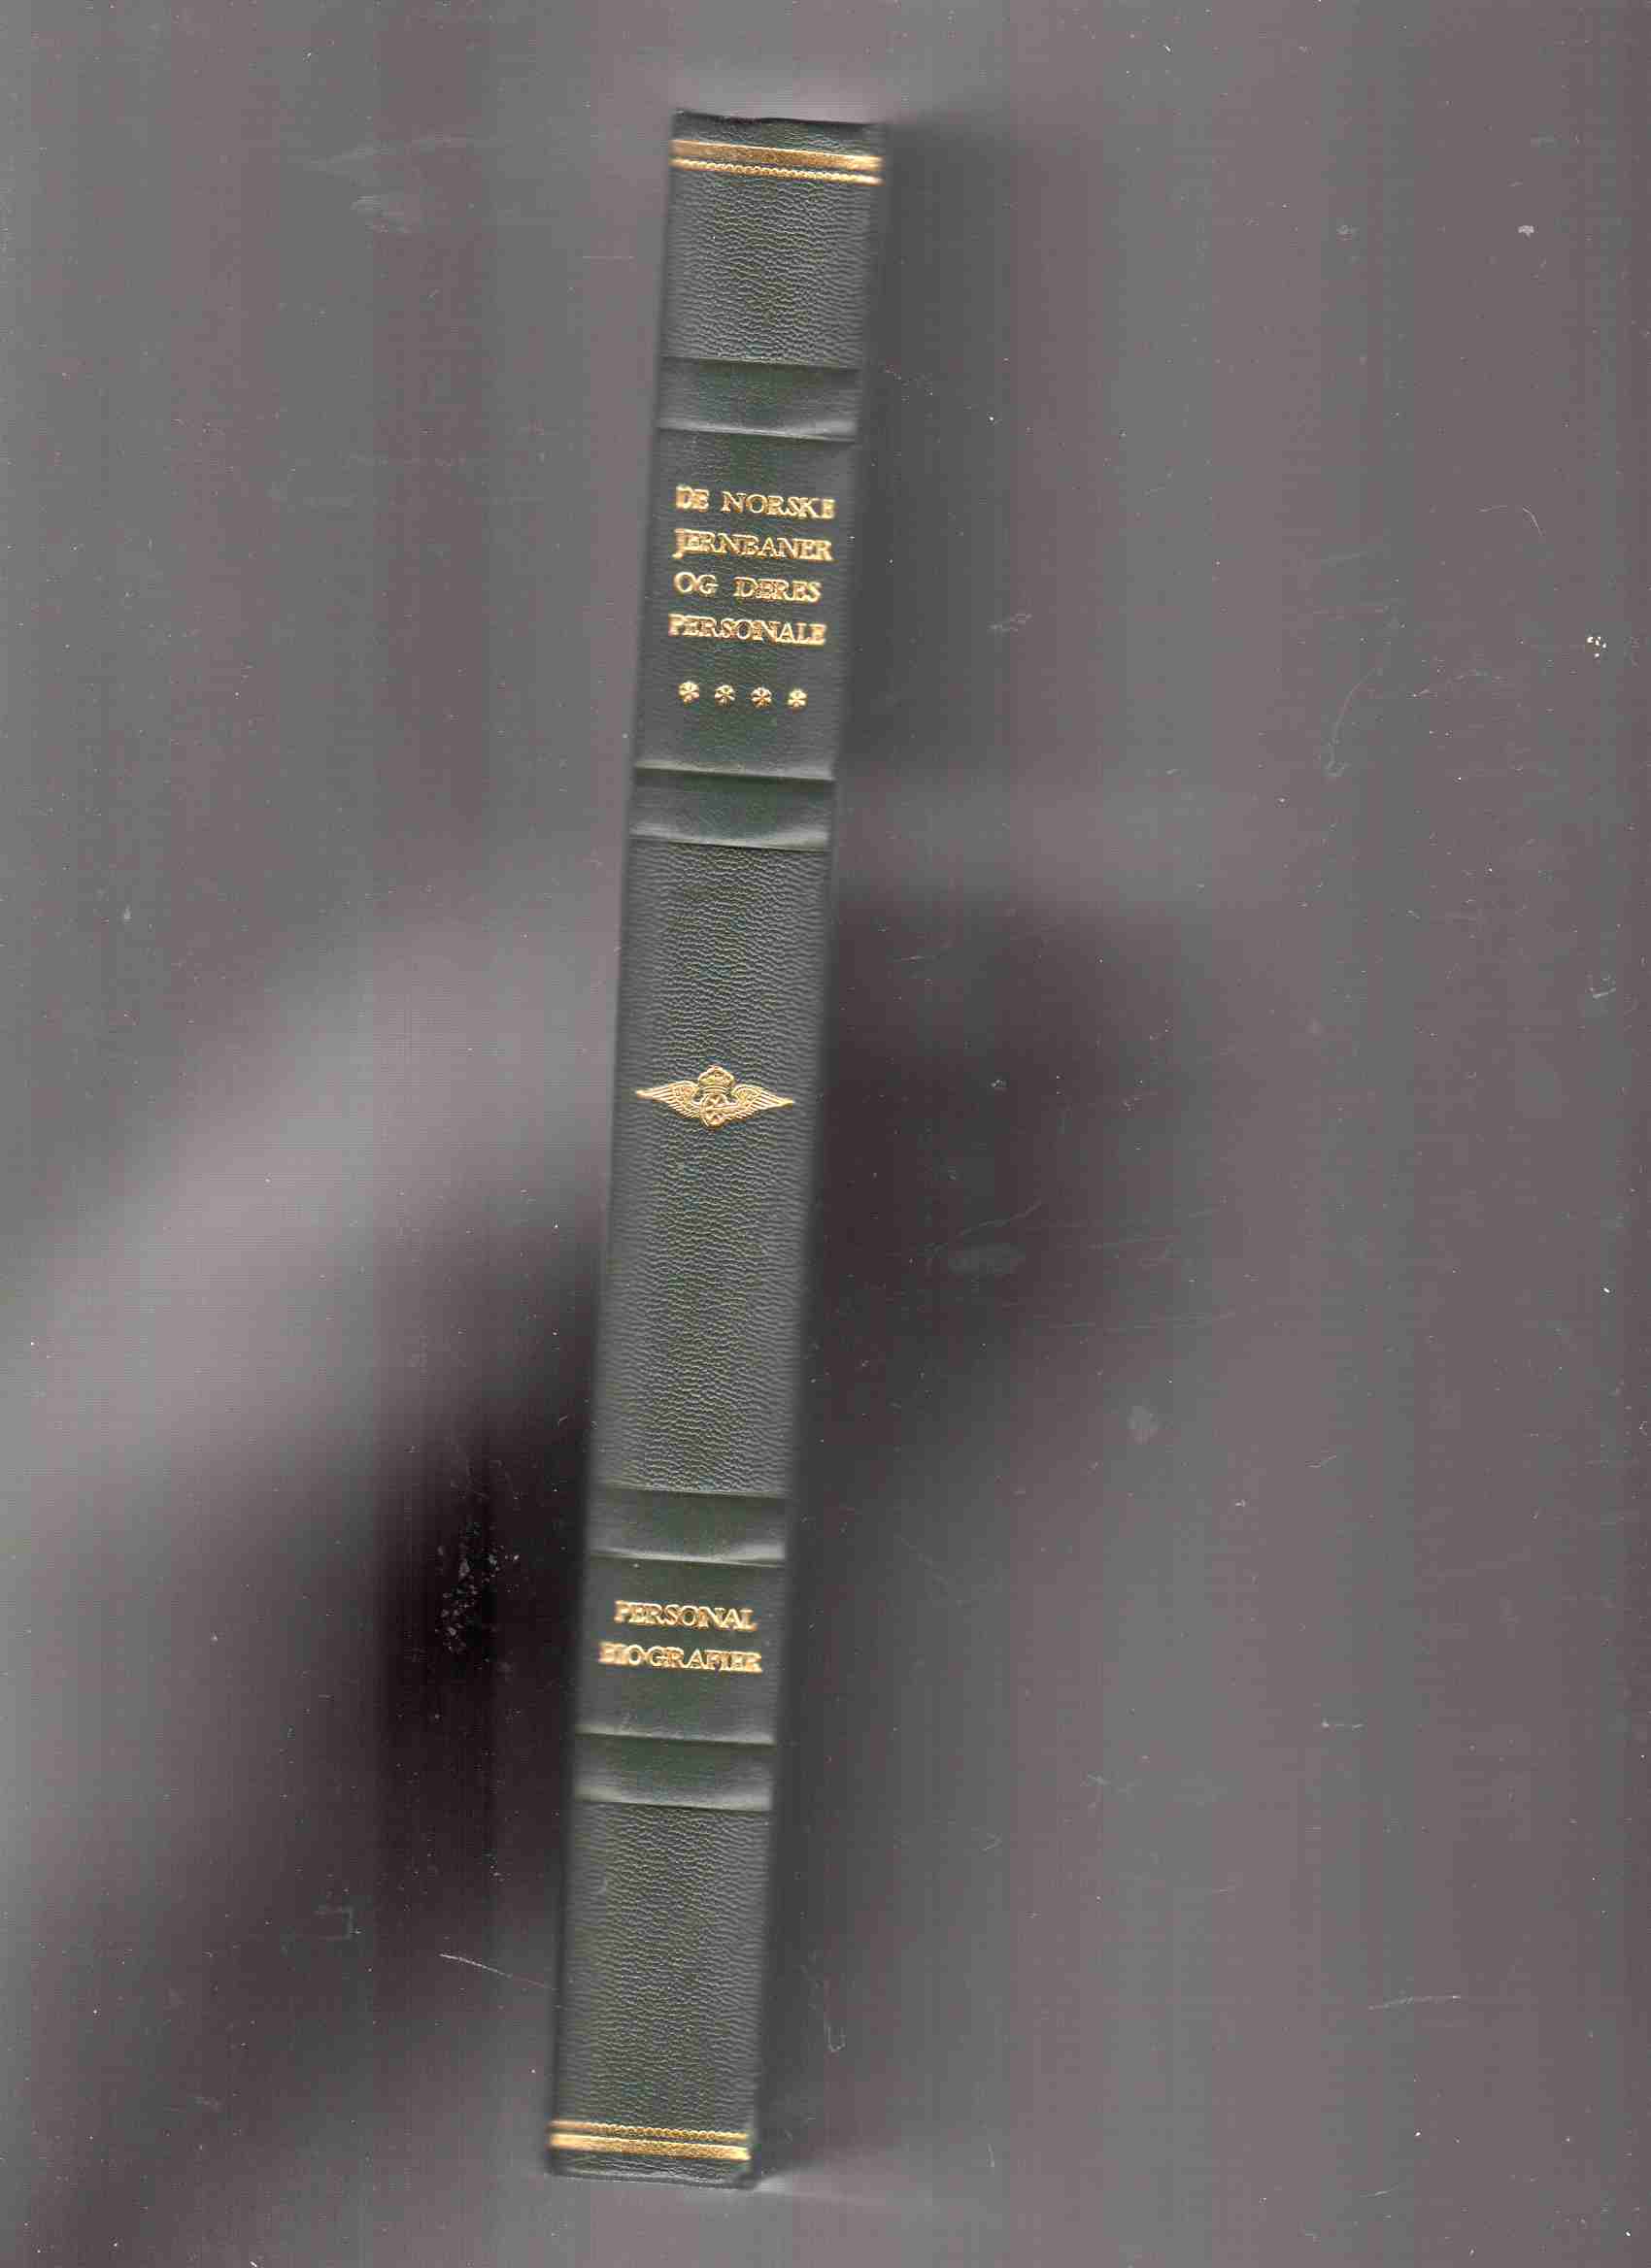 De norske jernbaner og deres personale Per Hohle Drifthistorie/personalbiografier 2 bind Grieg 1959 pene